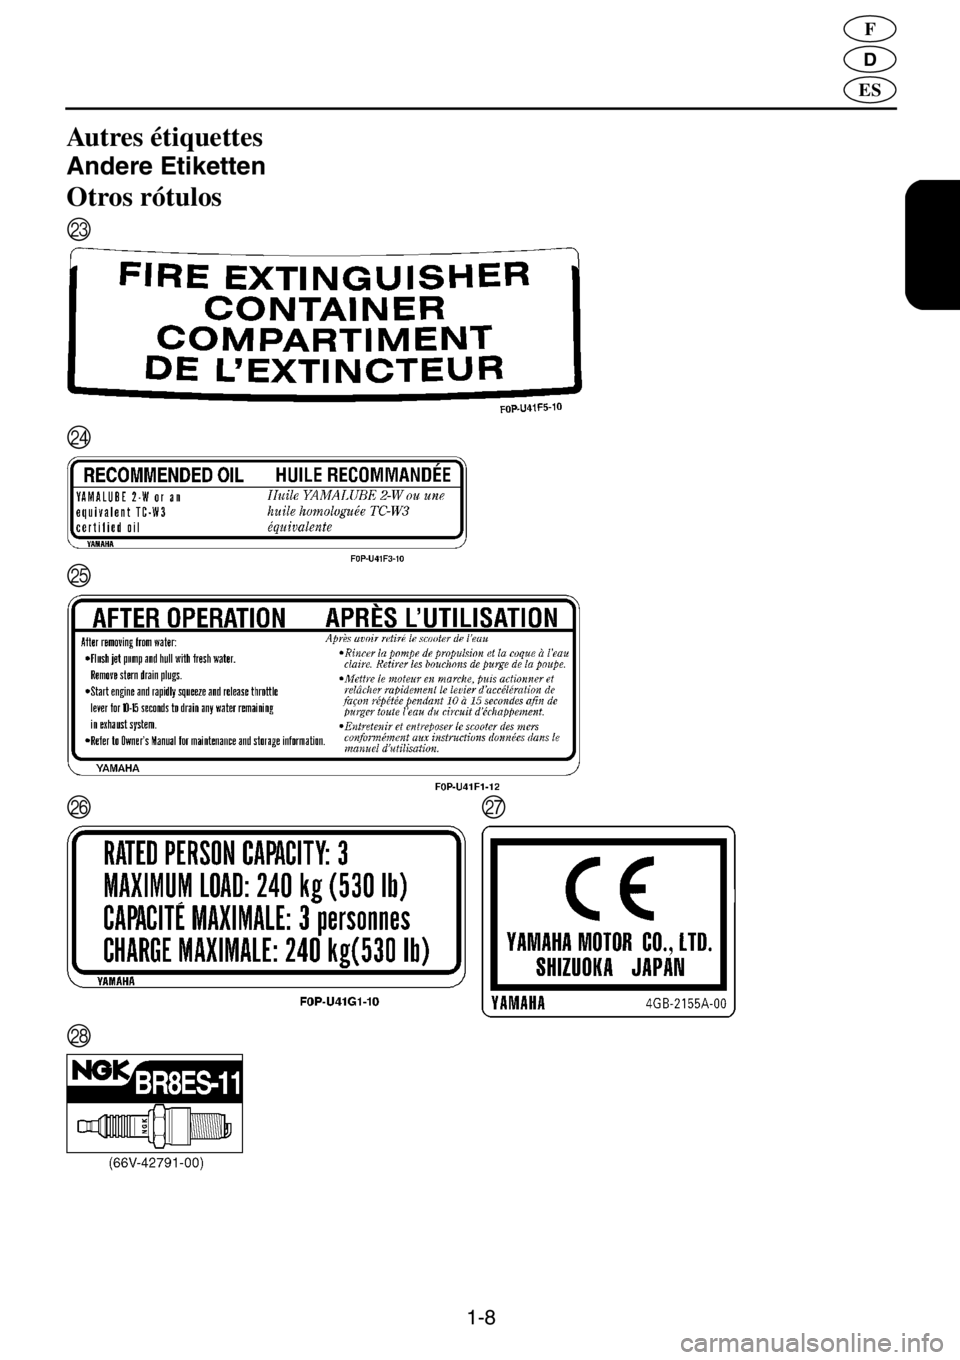 YAMAHA XL 1200 2001  Manuale de Empleo (in Spanish) 1-8
D
F
ES
Autres étiquettes 
Andere Etiketten 
Otros rótulos 
M
N
O
PQ
R 